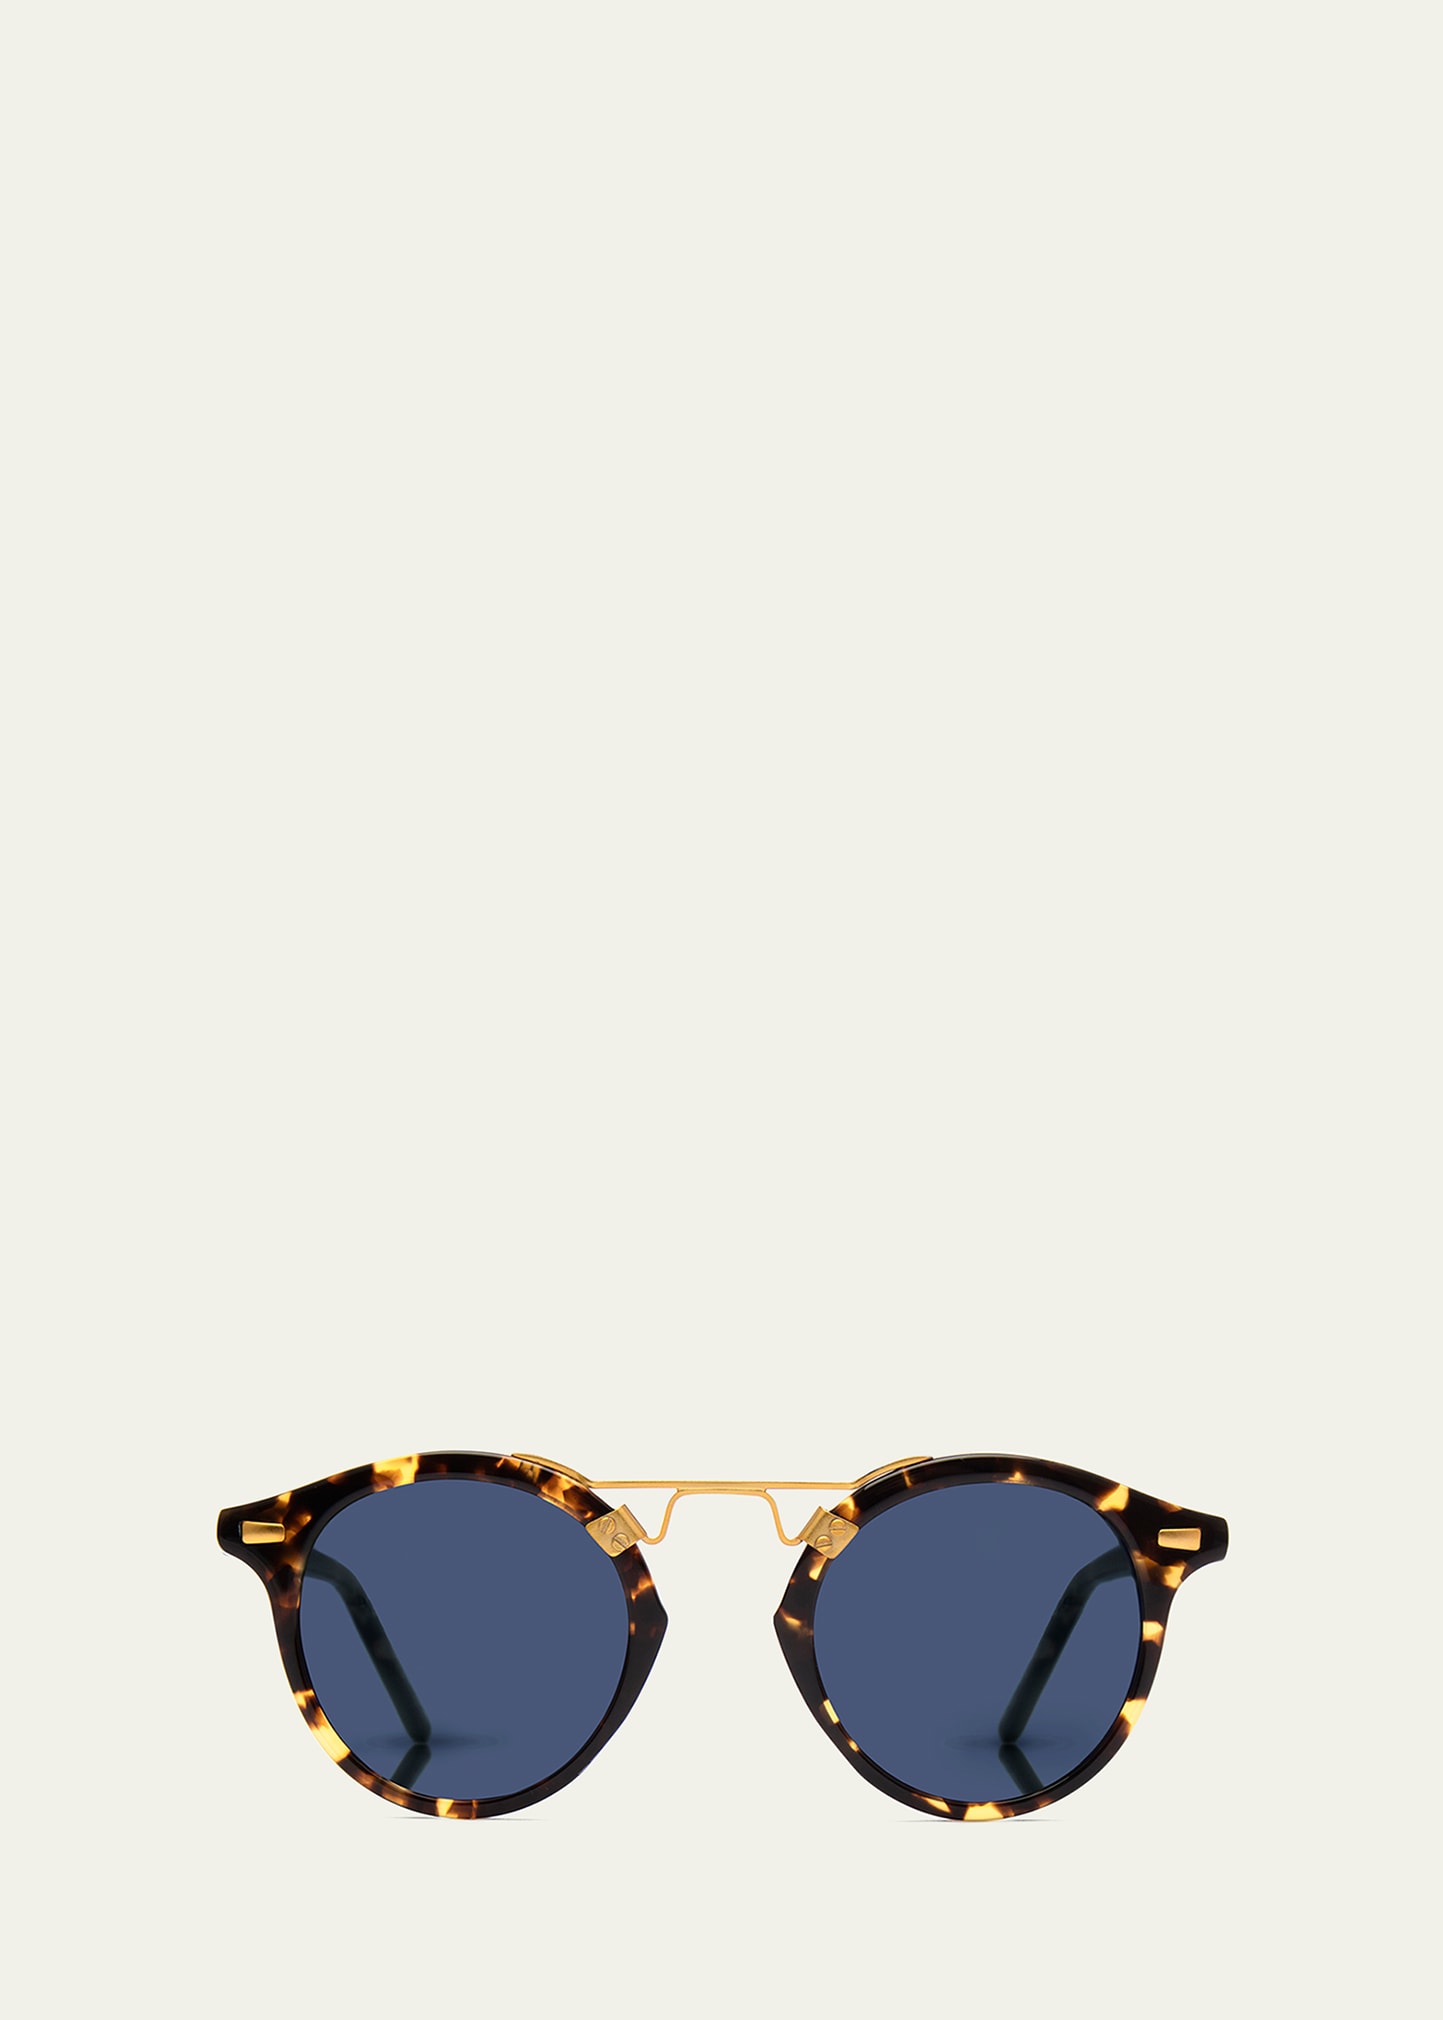 St. Louis Round Polarized Sunglasses, Blue/Brown Tortoise | Bergdorf Goodman